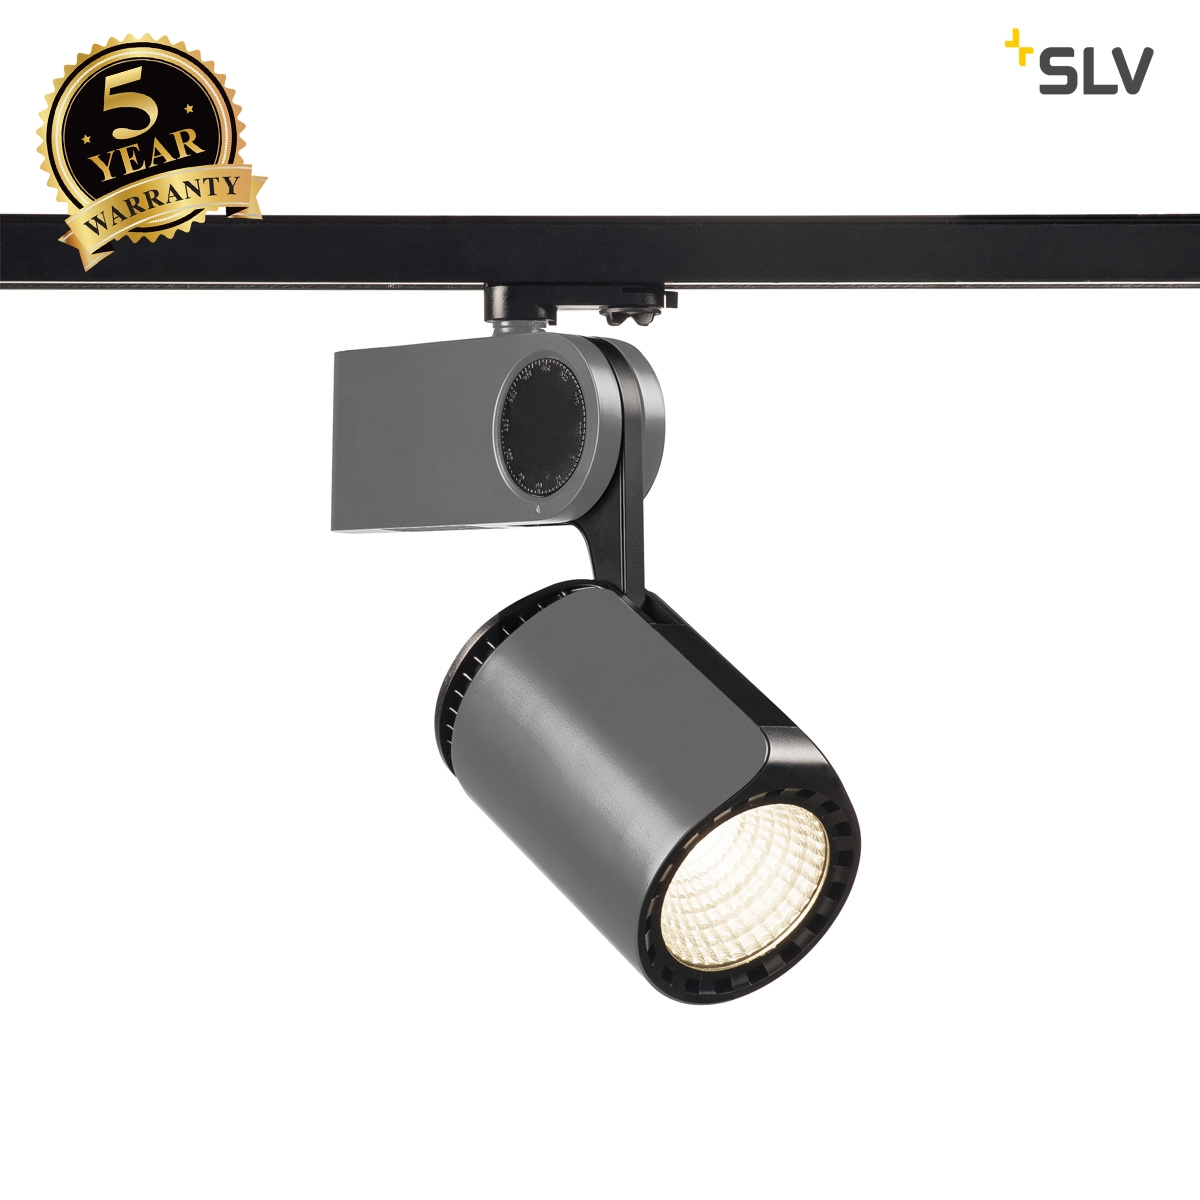 SLV DANCER LED Spot, silver-grey/black, 3000K, incl. 3-circuit adapter 152924